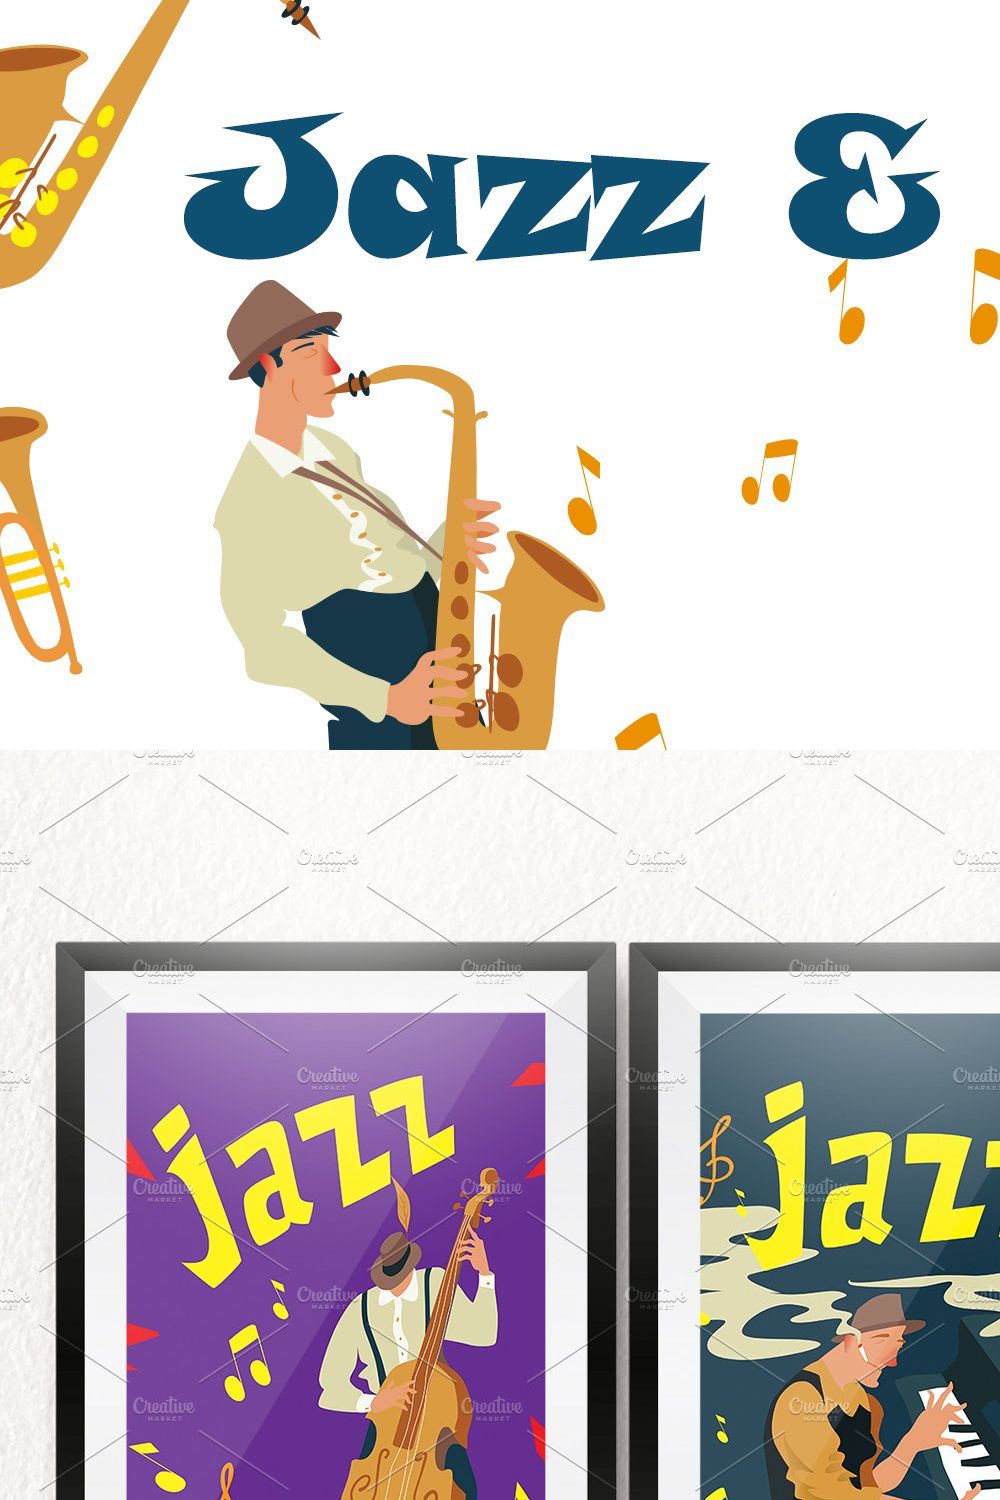 Jazz & blues pinterest preview image.